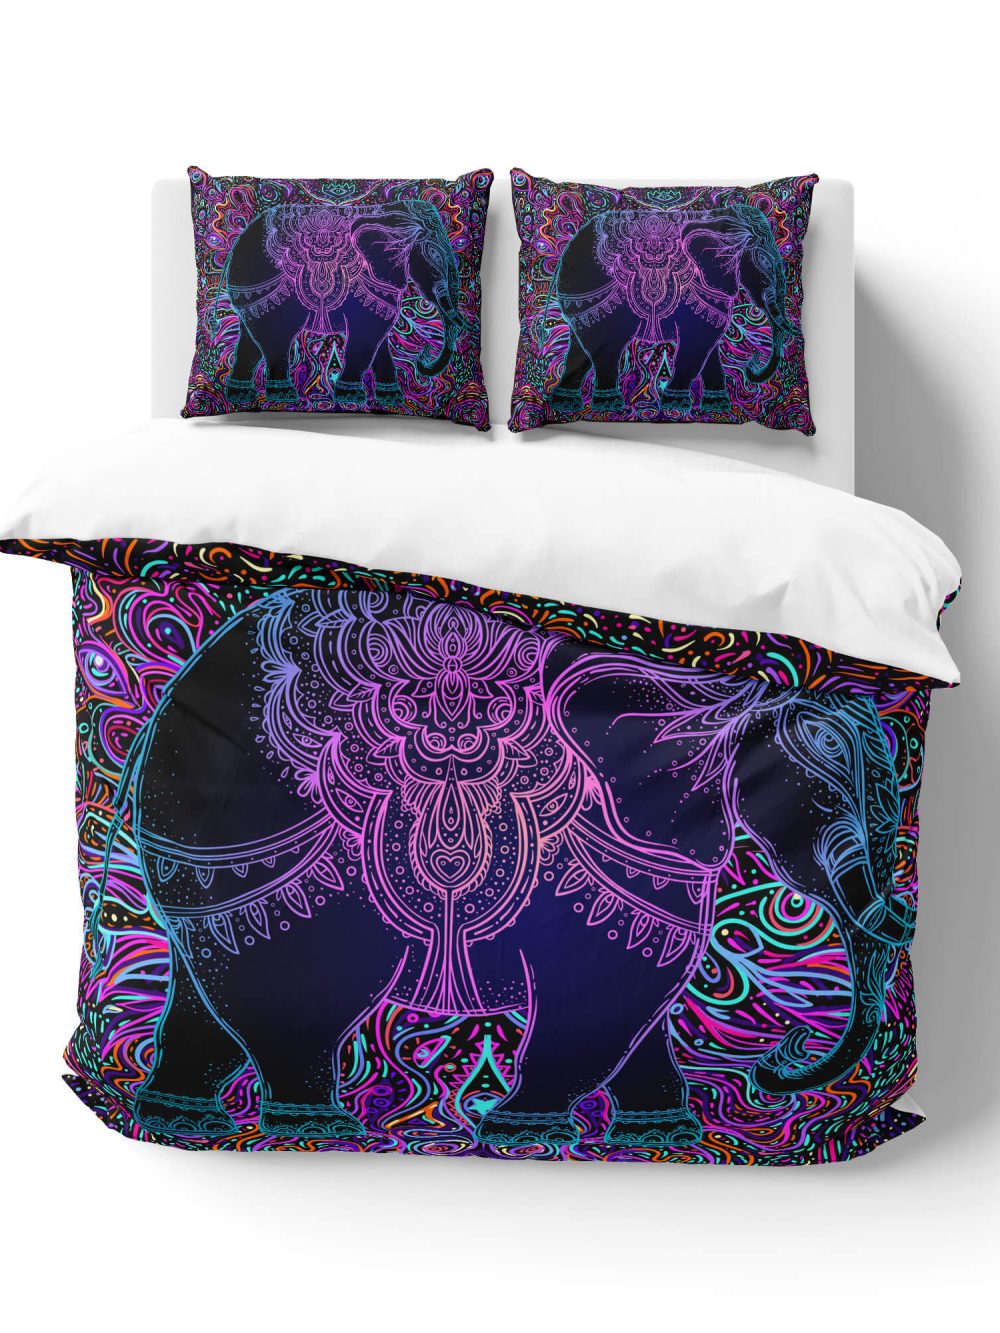 Enlightened Elephant Bedding Set